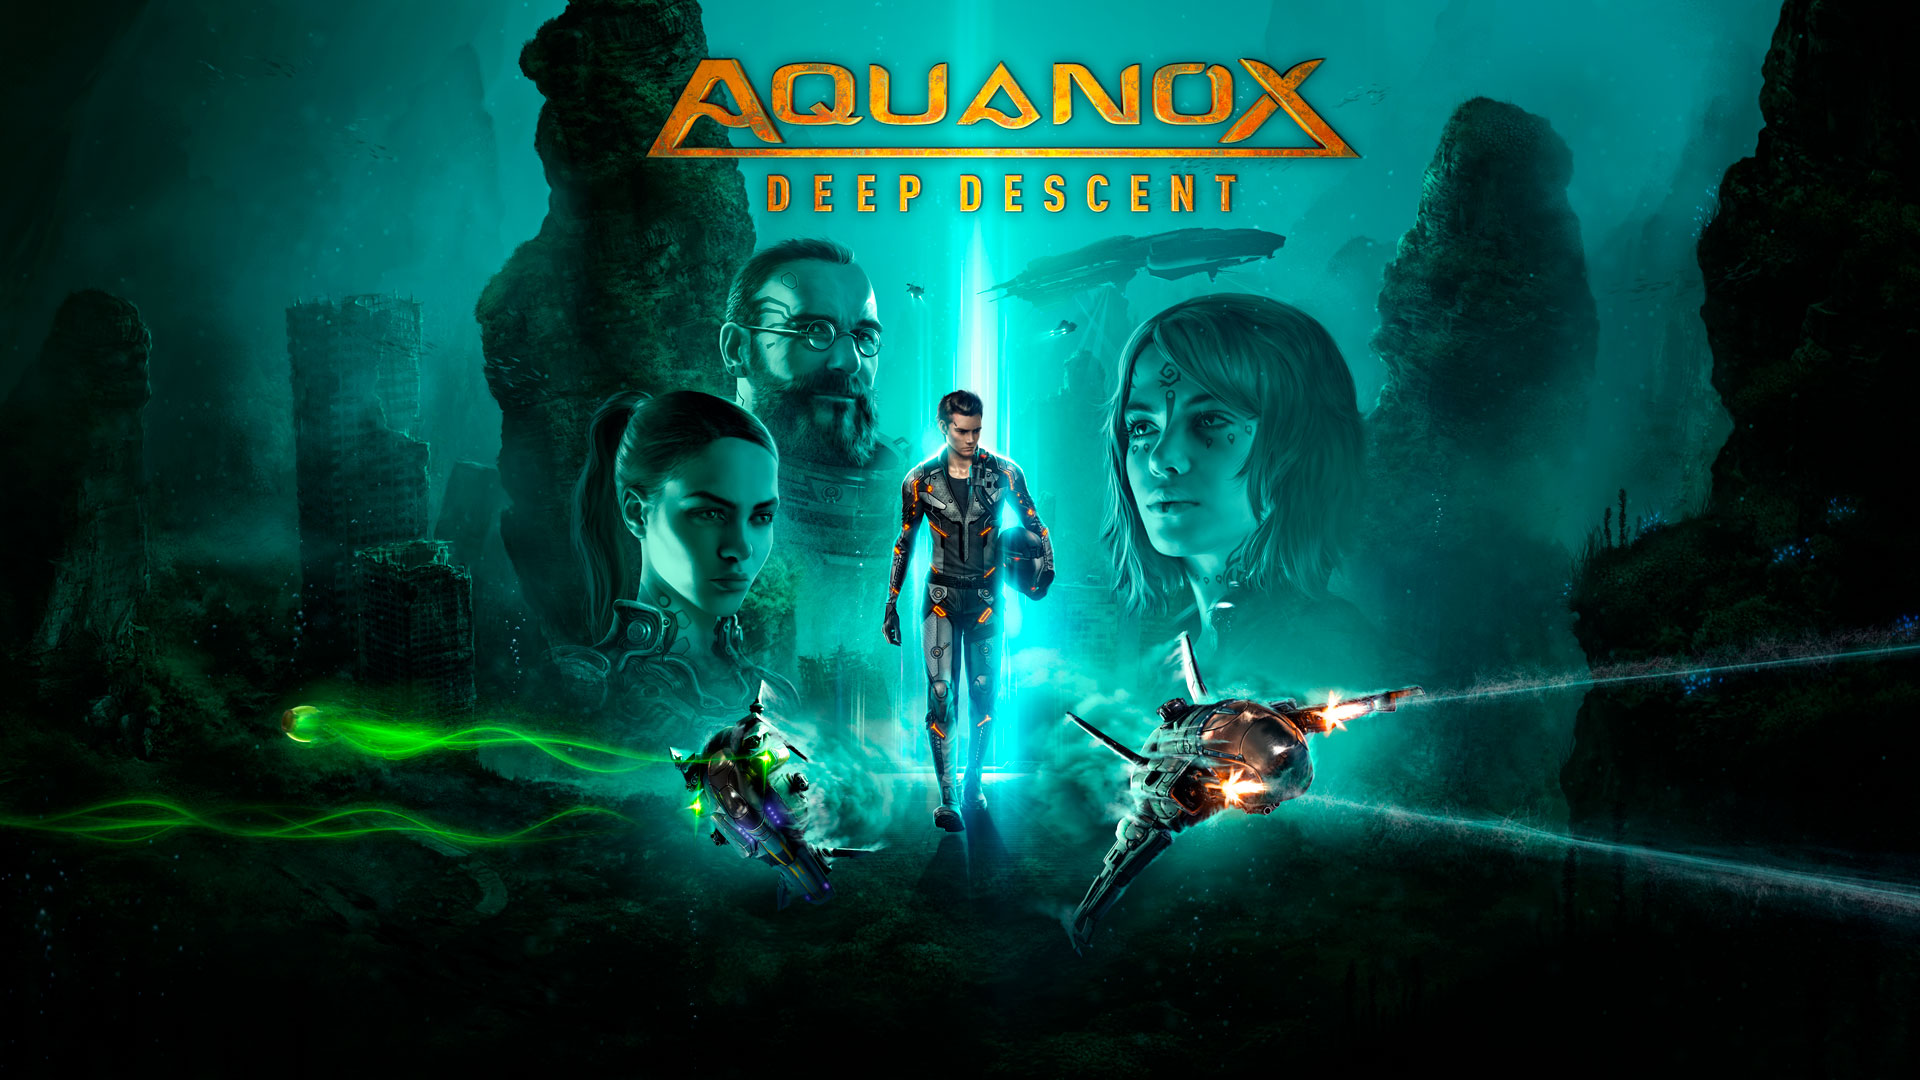 free download aquanox xbox